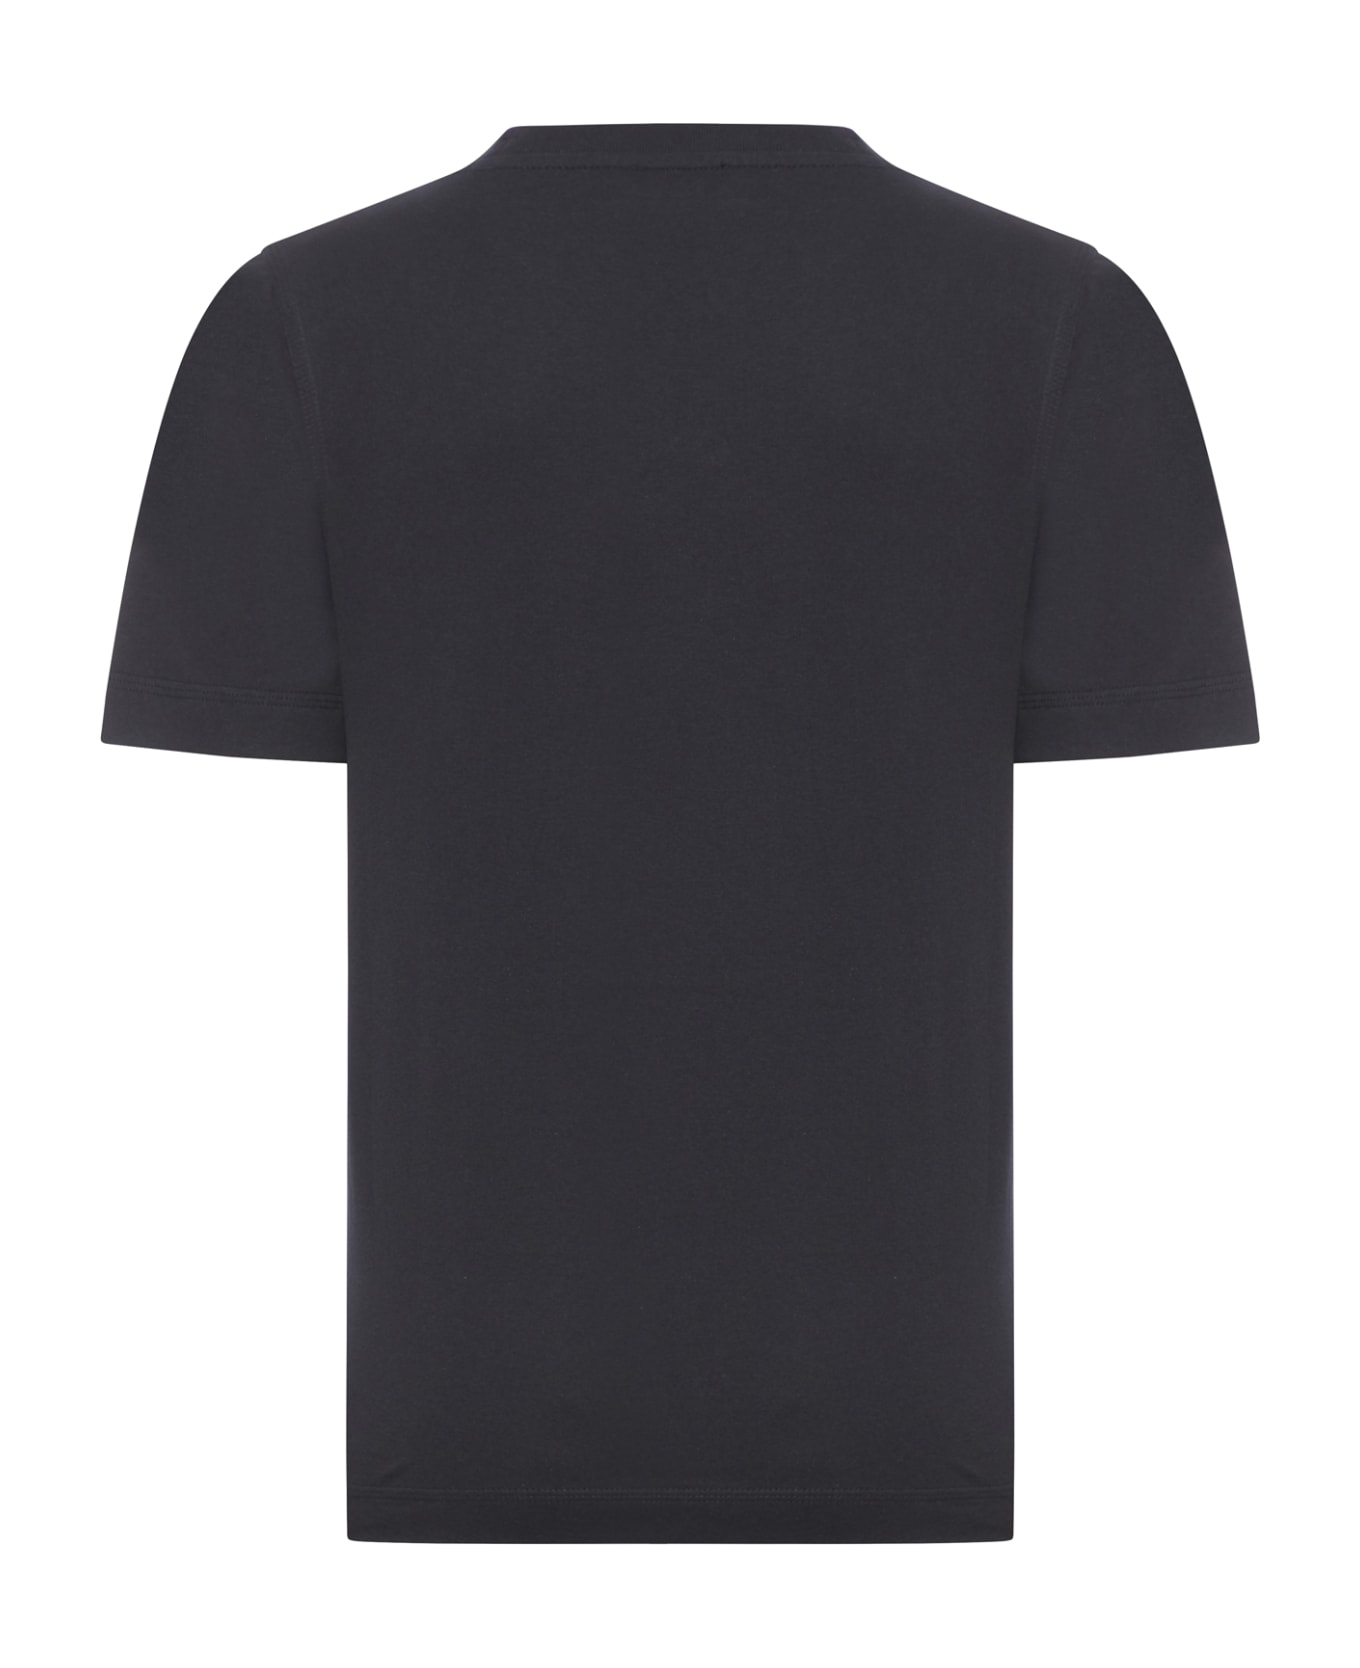 Burberry Hs24-mw-for-2.6.126 M Jerseywear - Black シャツ